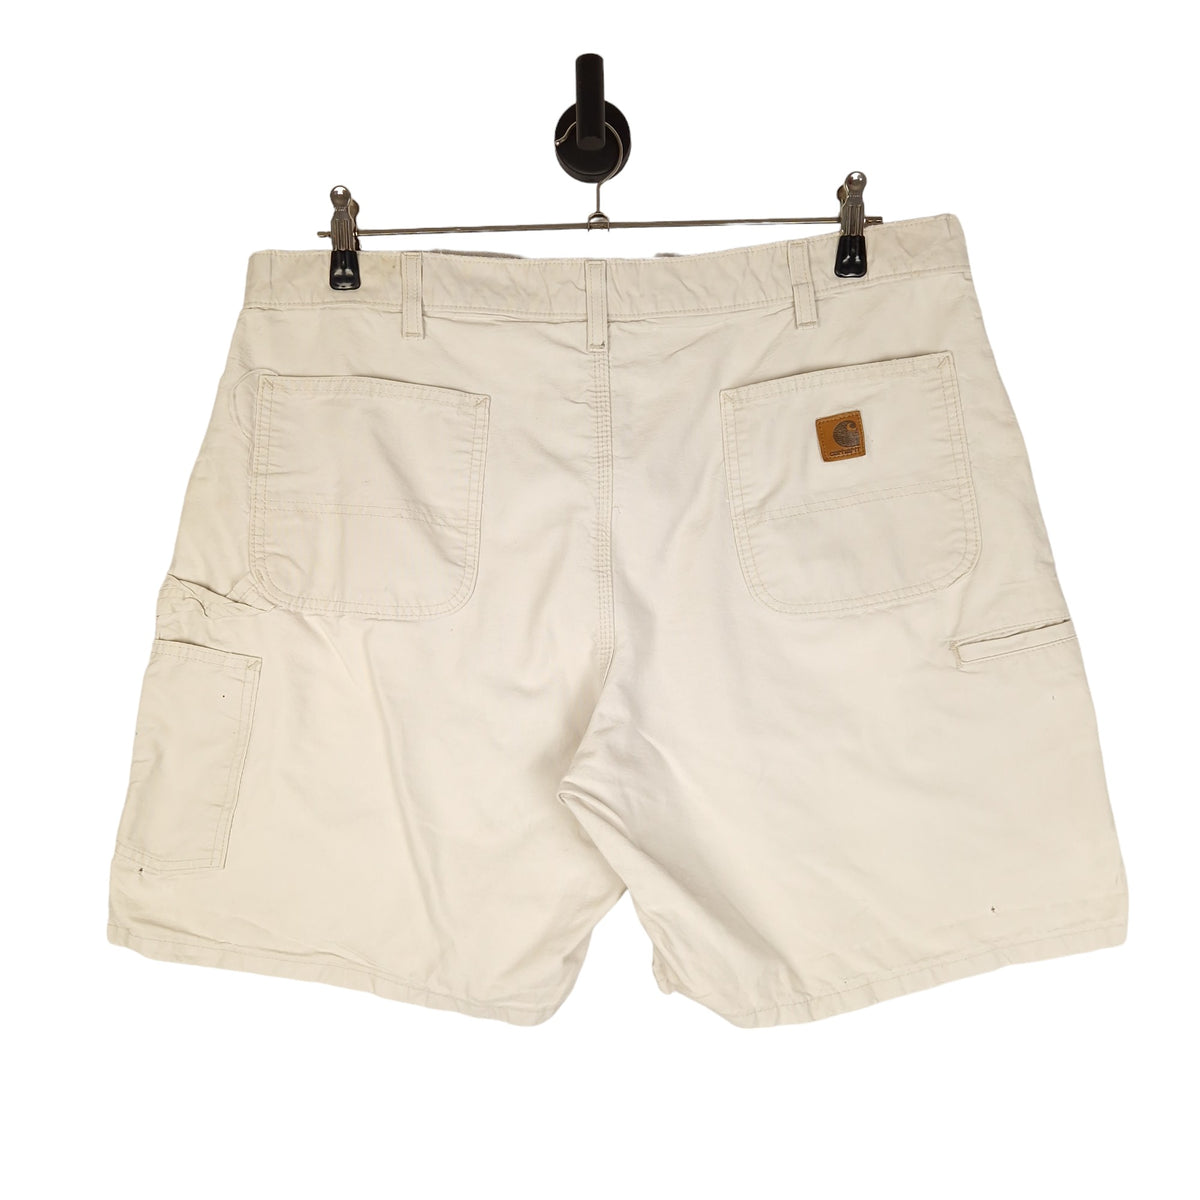 Carhartt Carpenter Shorts - Size W40